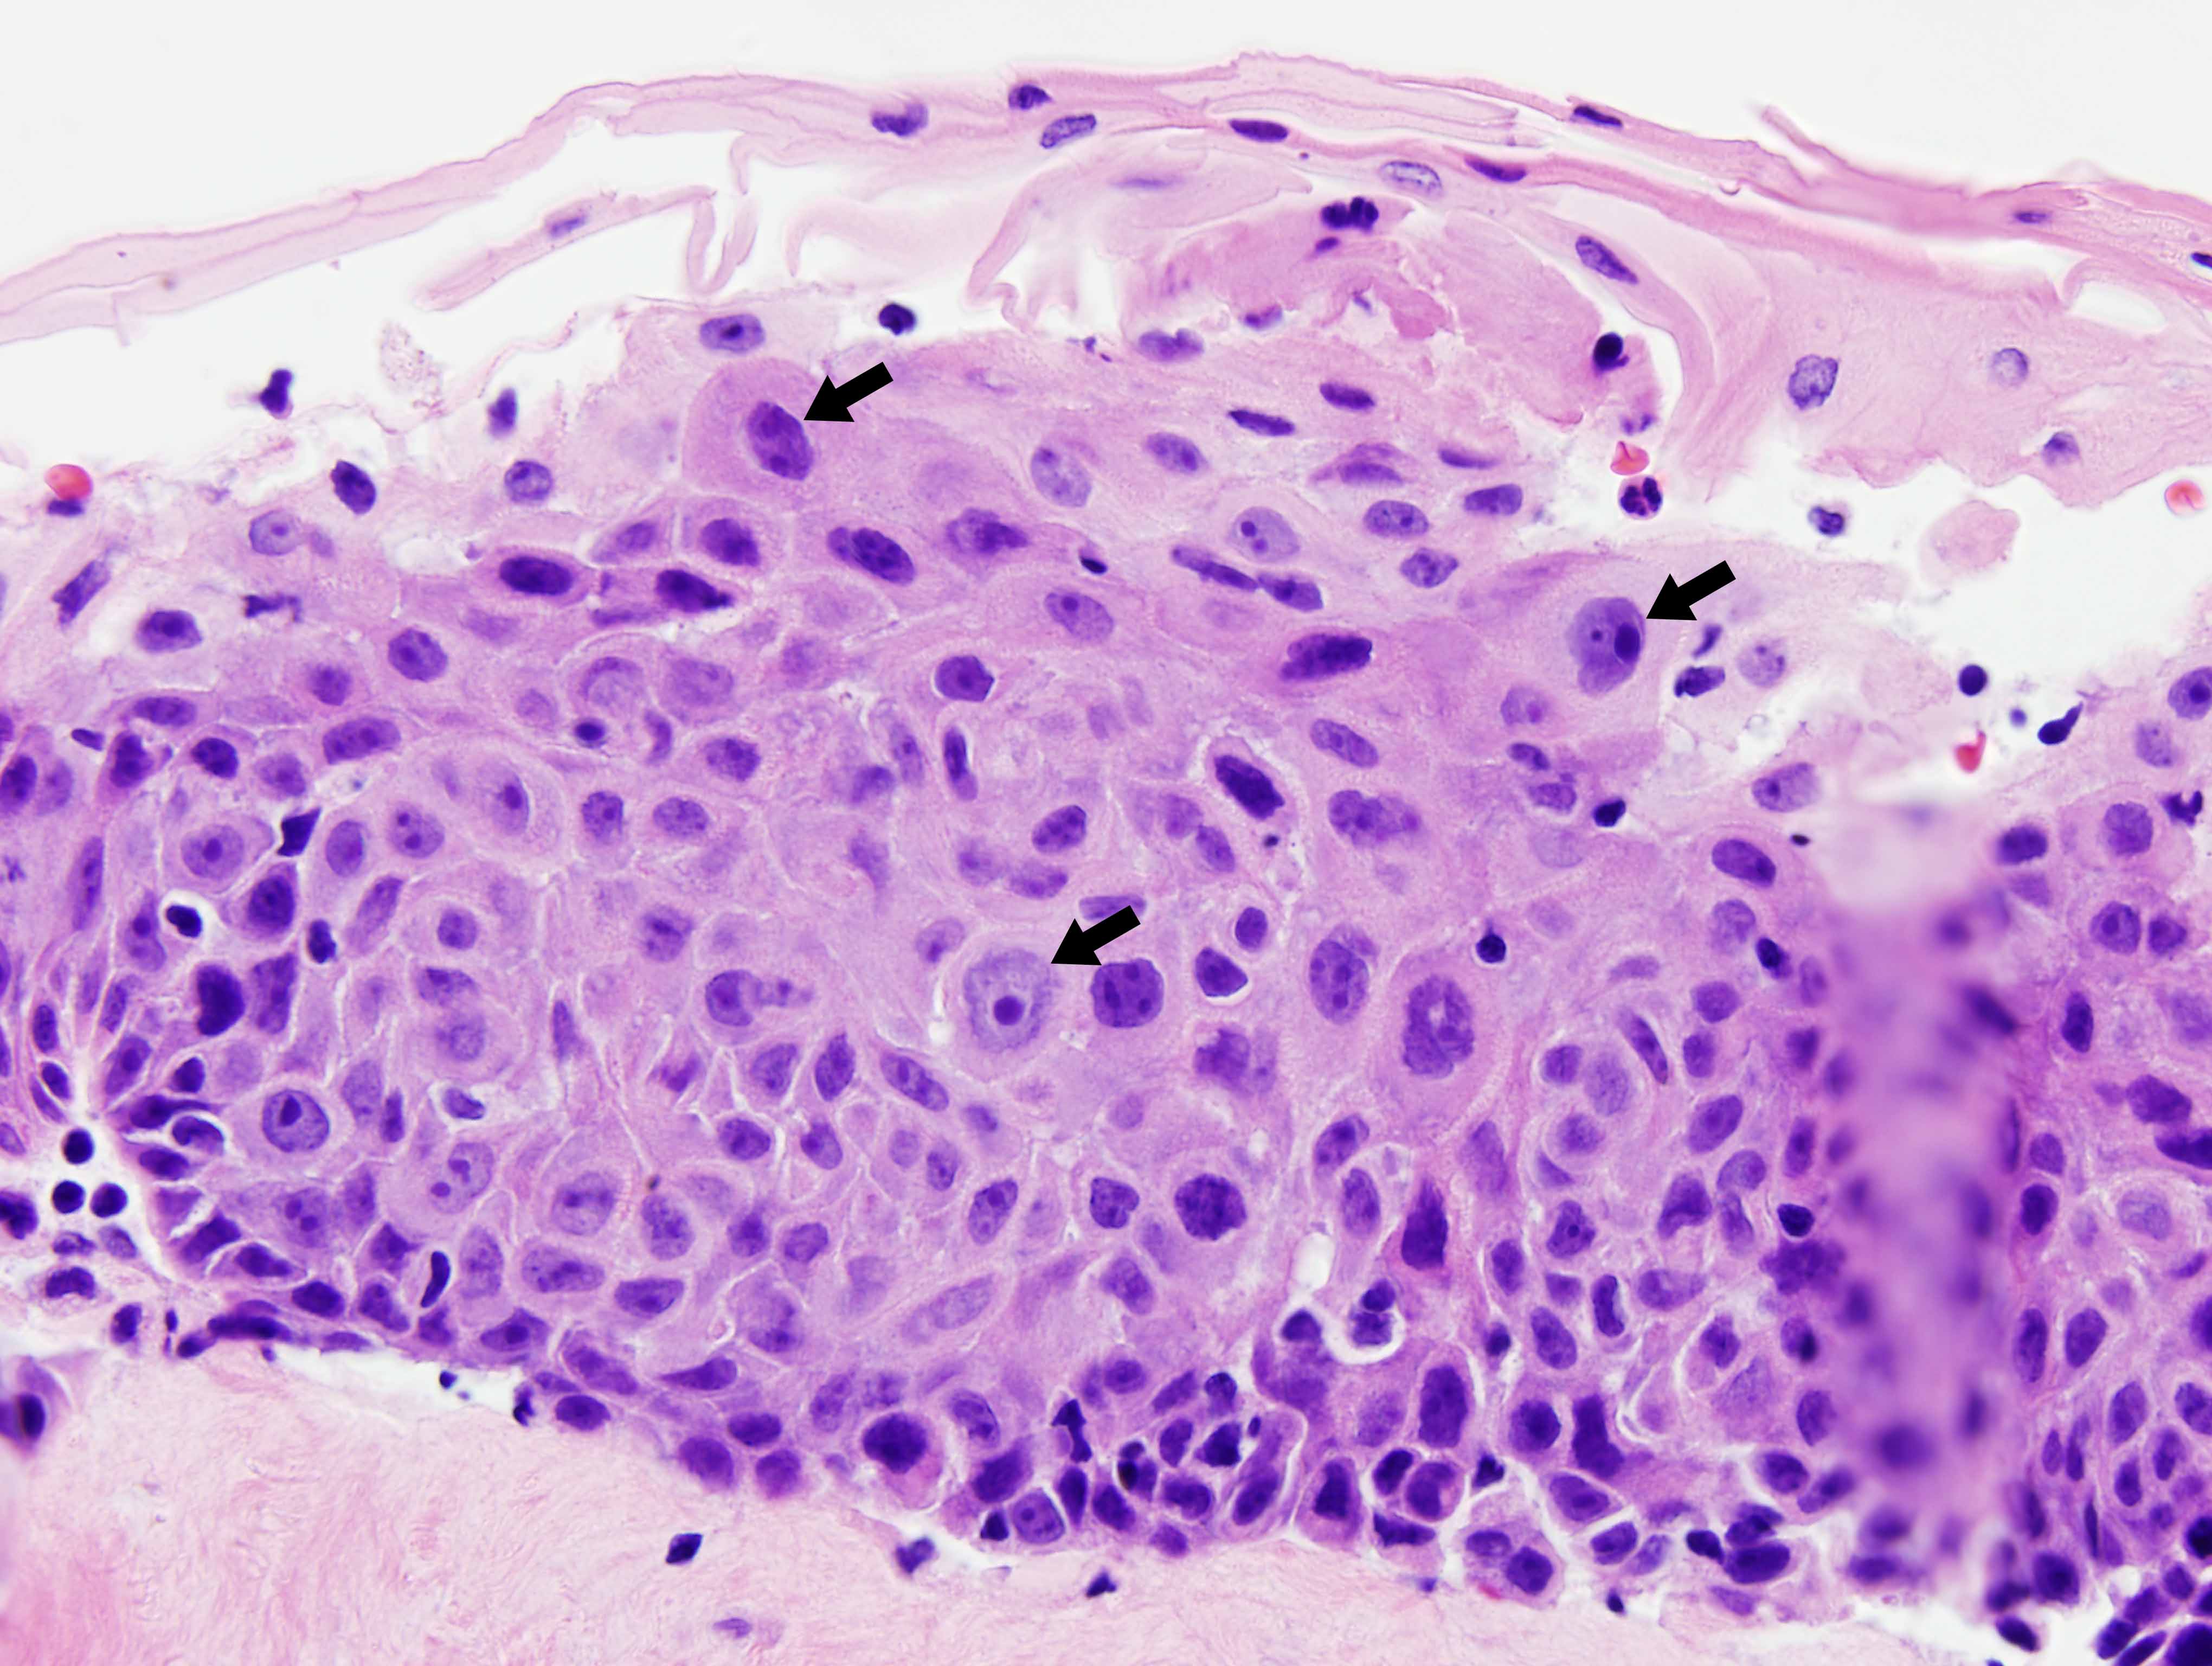 Laryngeal papilloma with dysplasia